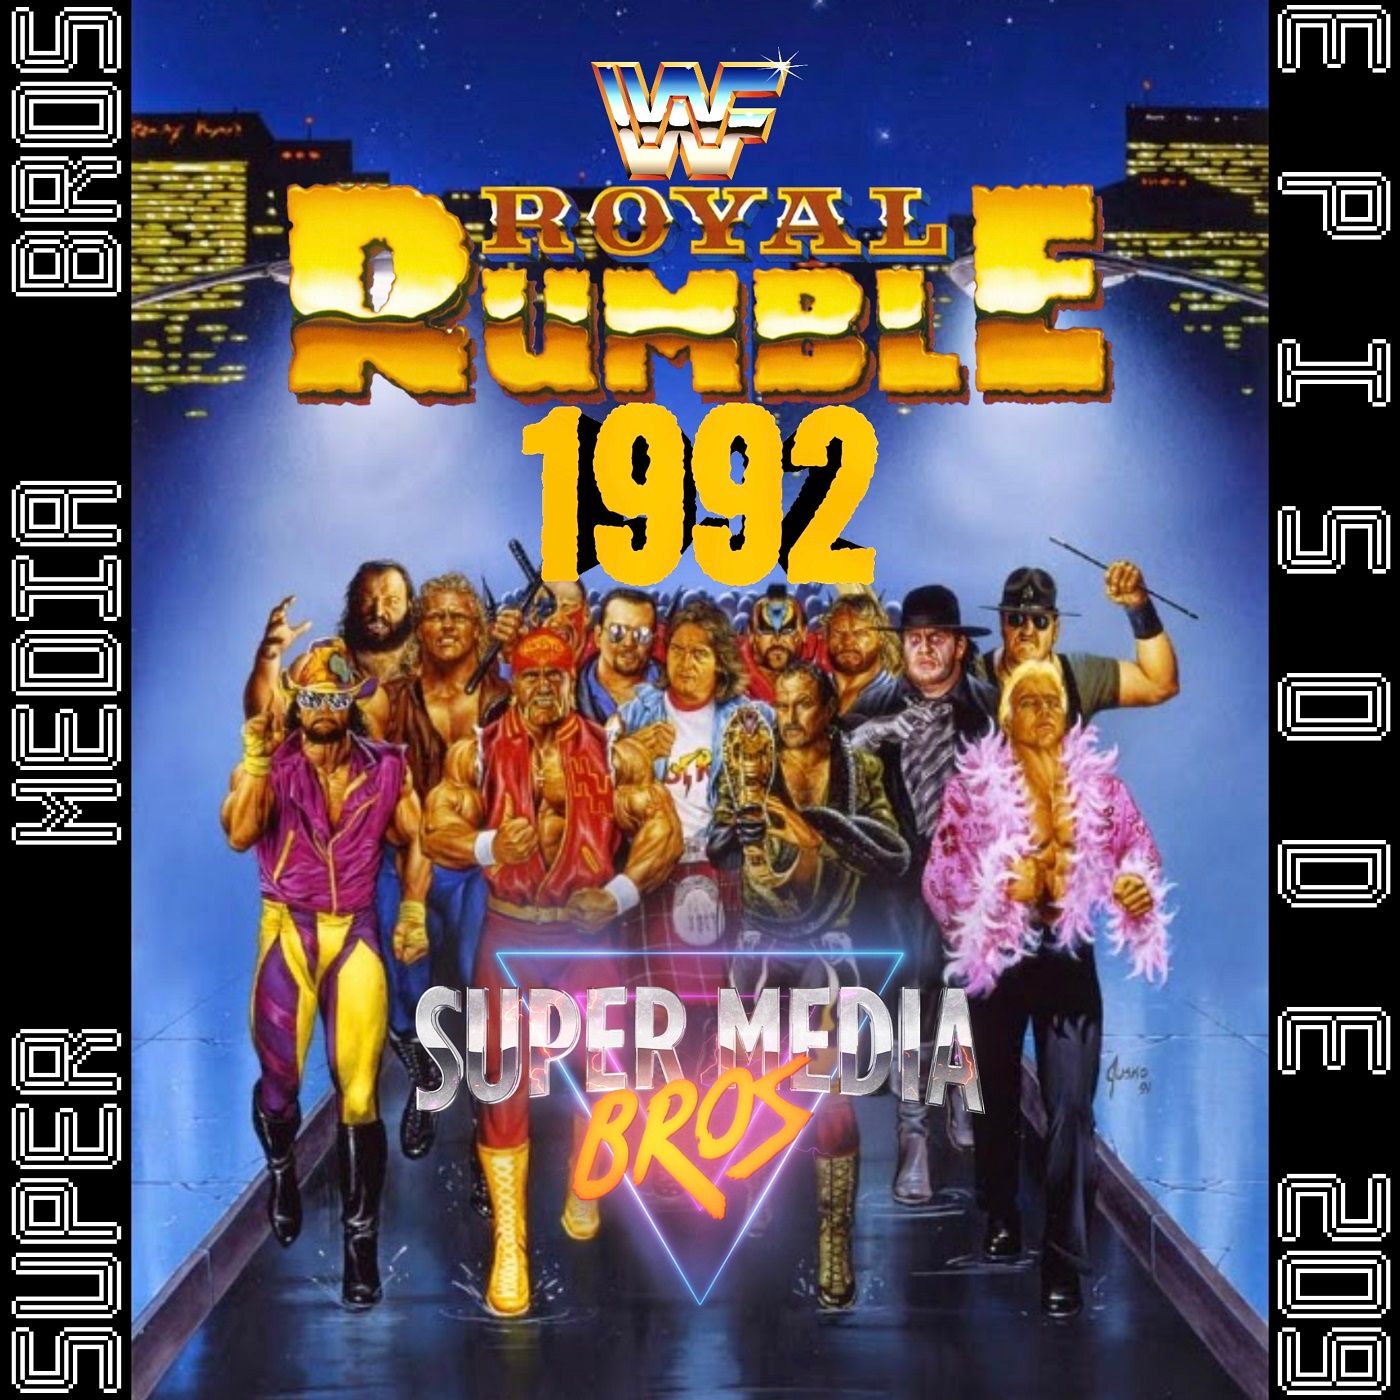 WWF Royal Rumble 1992 (Ep. 209) Image